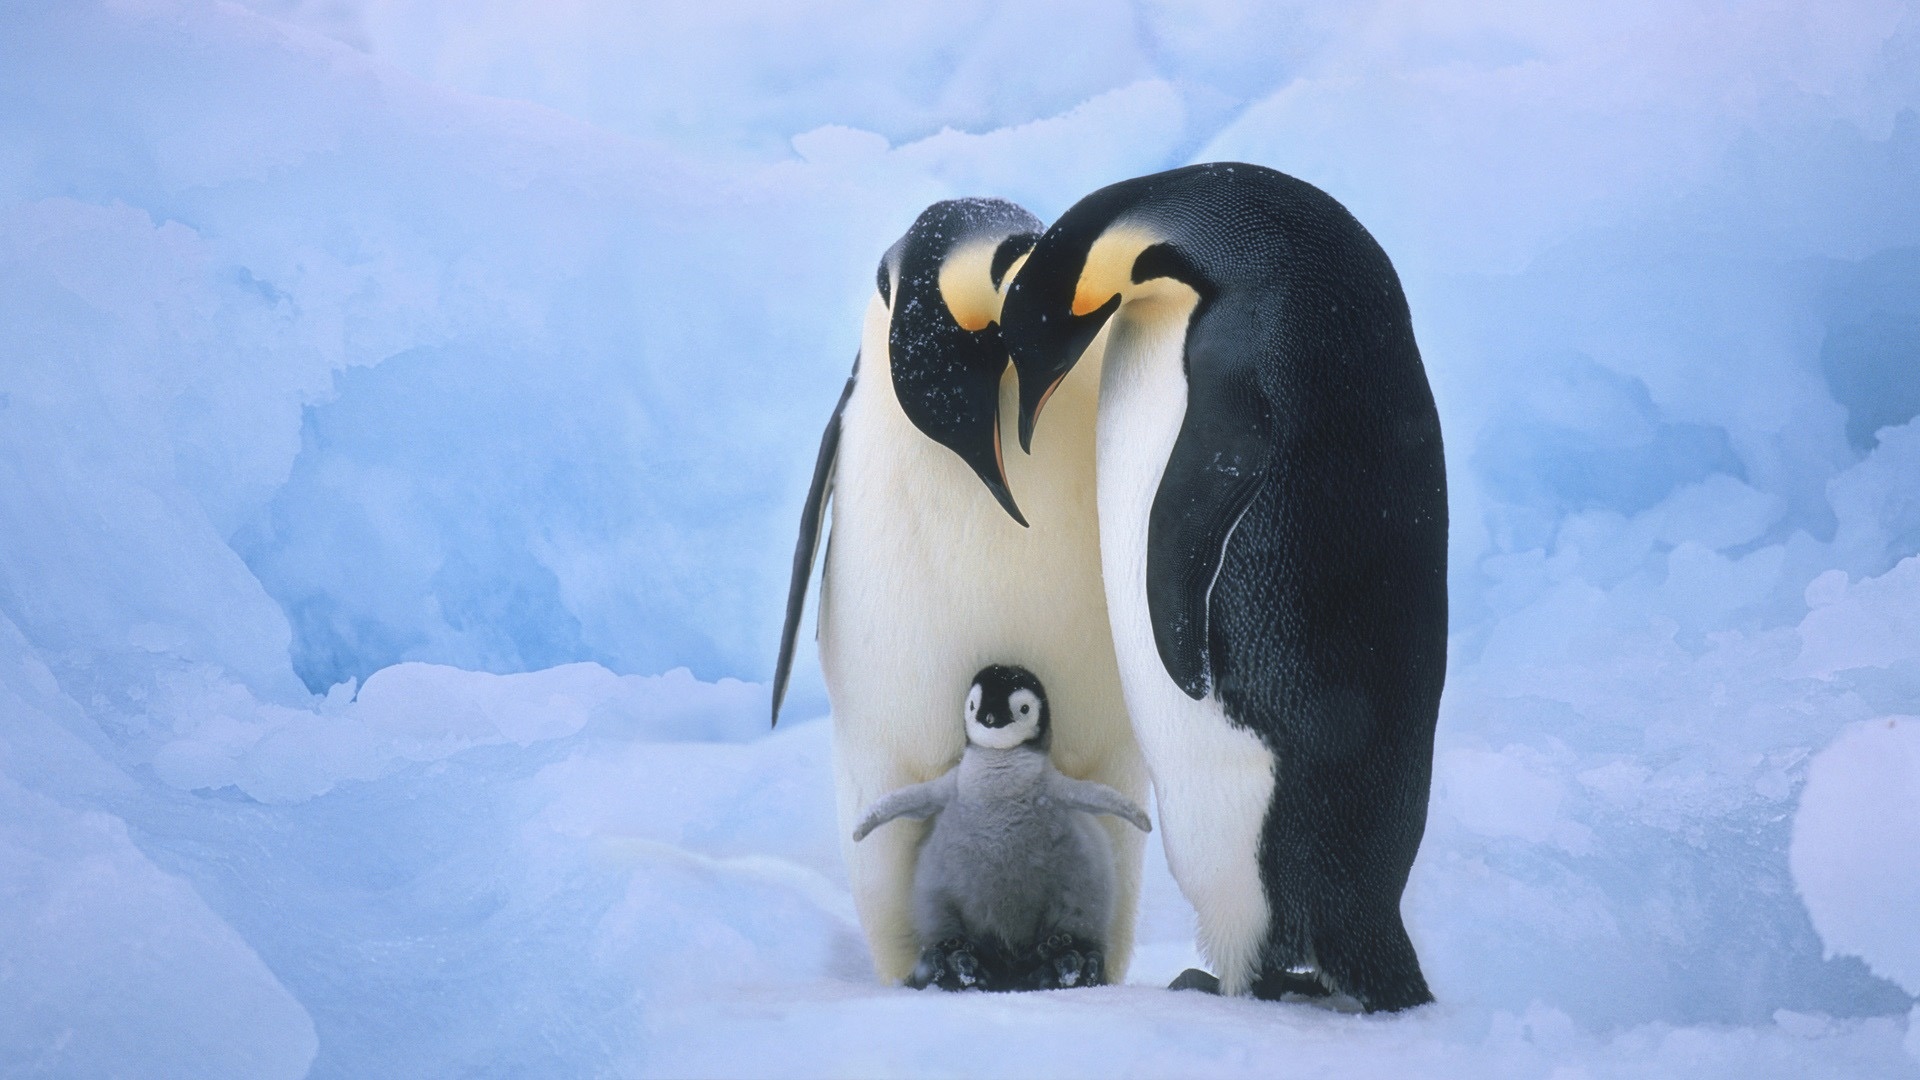 Penguin, Family wallpaper, Adorable gathering, Antarctic love, 1920x1080 Full HD Desktop